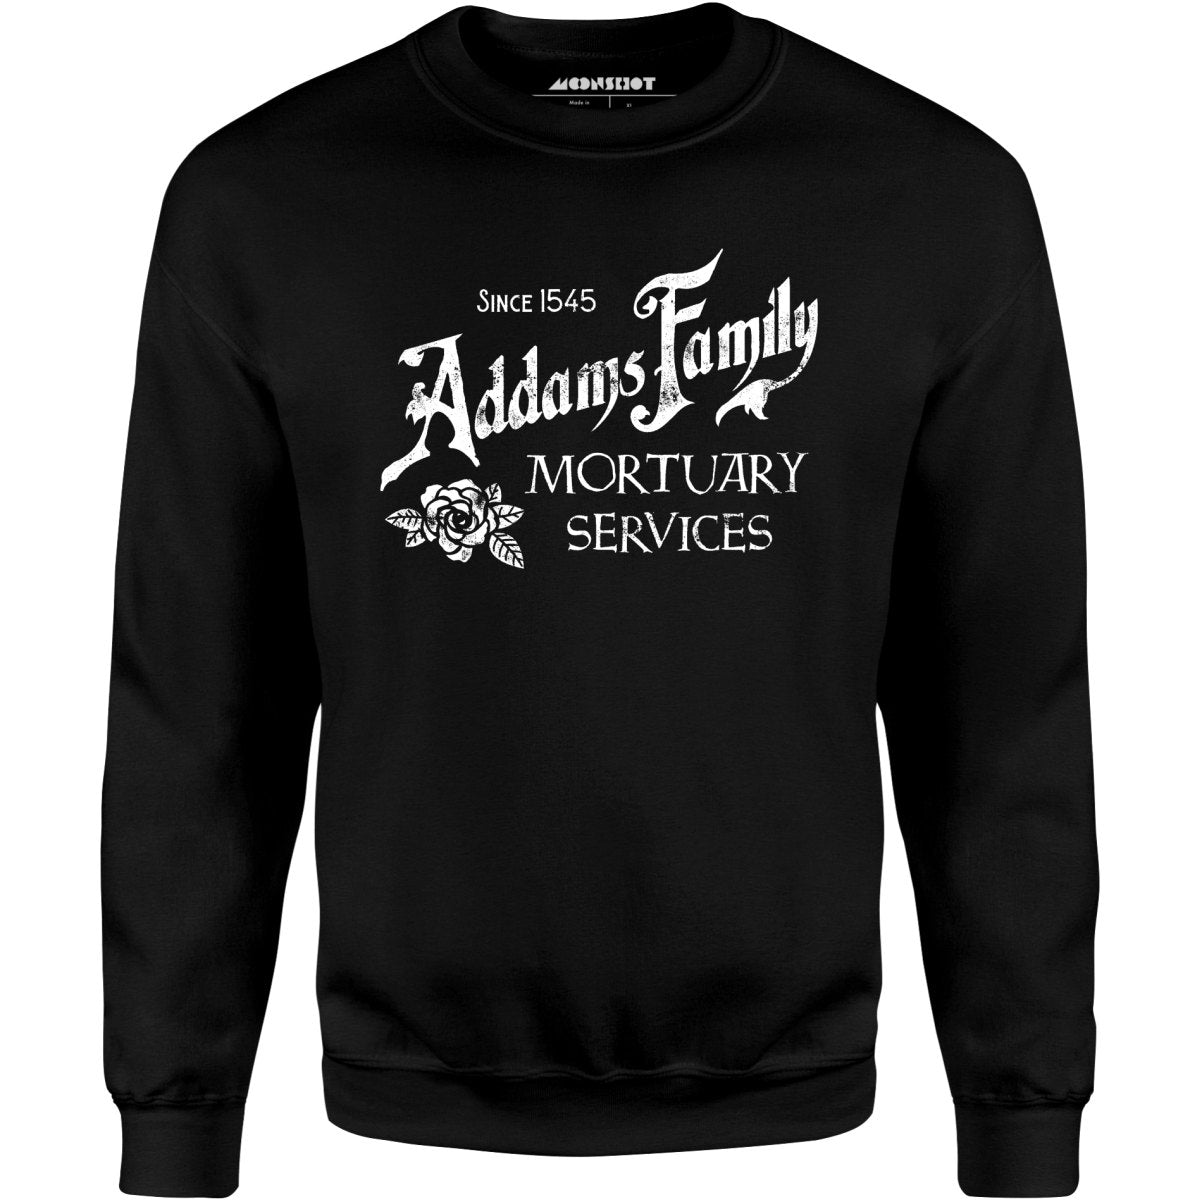 Addams Family Mortuary Services - Unisex Sweatshirt